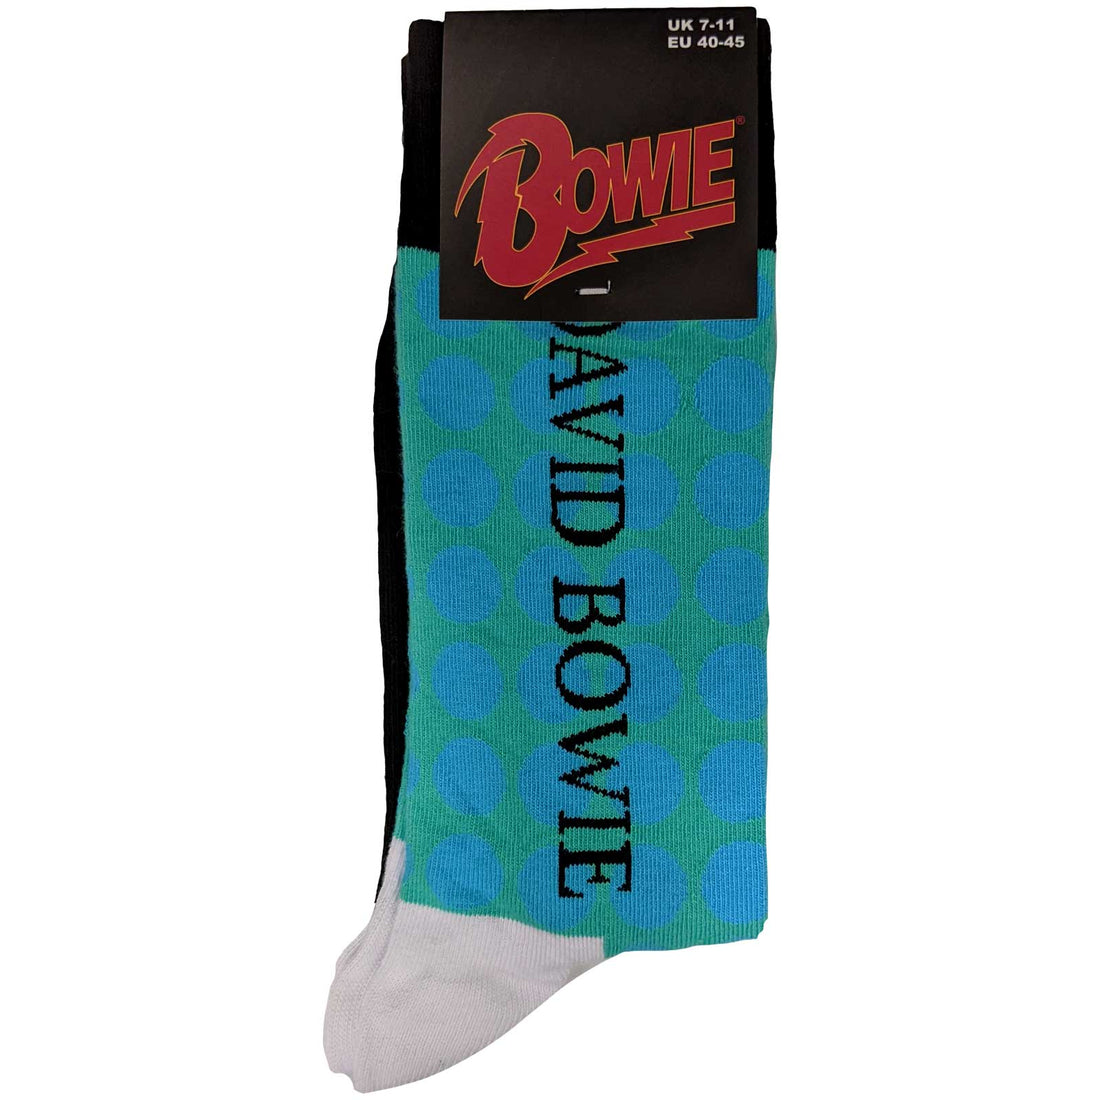 David Bowie Ankle Socks: Circles Pattern (US Size 8 - 12)